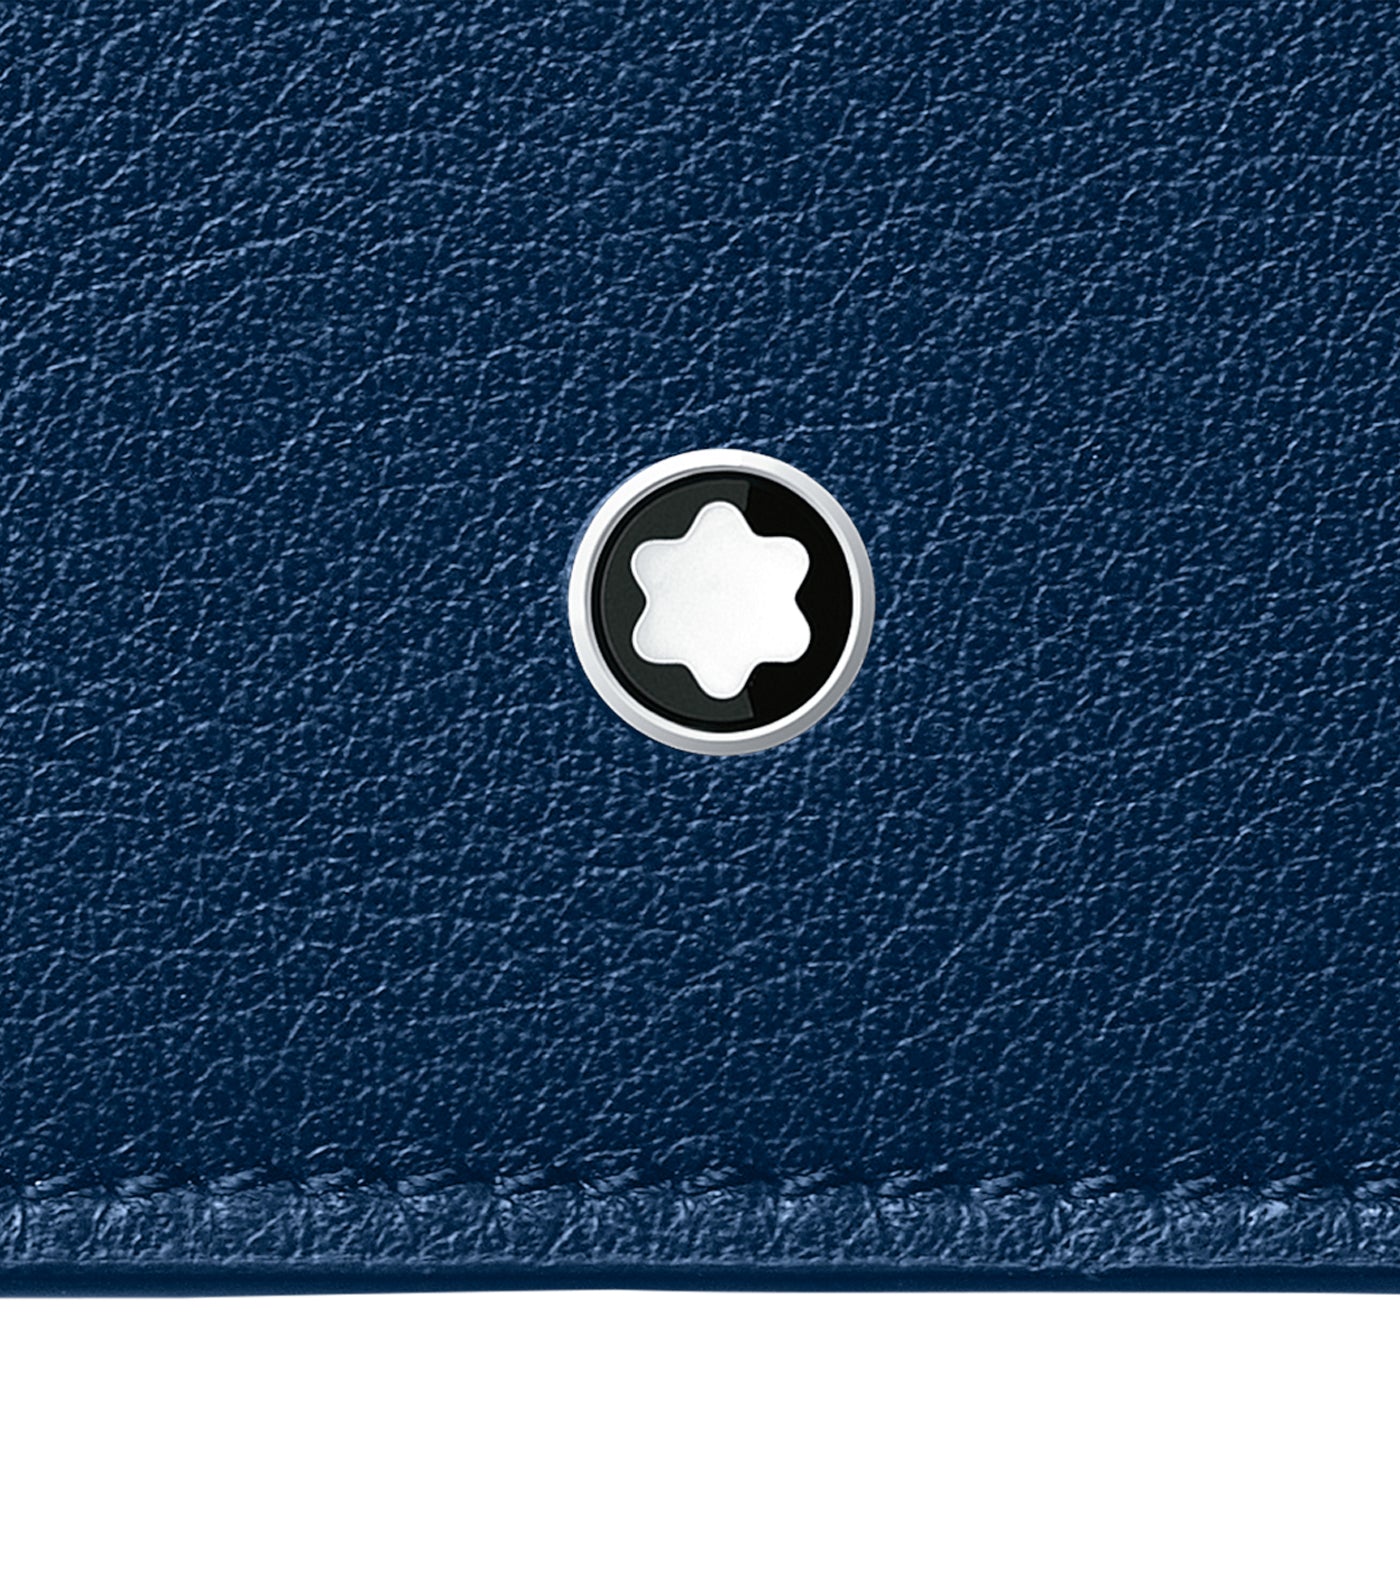 Meisterstück Selection Soft Card Holder 6cc Blue